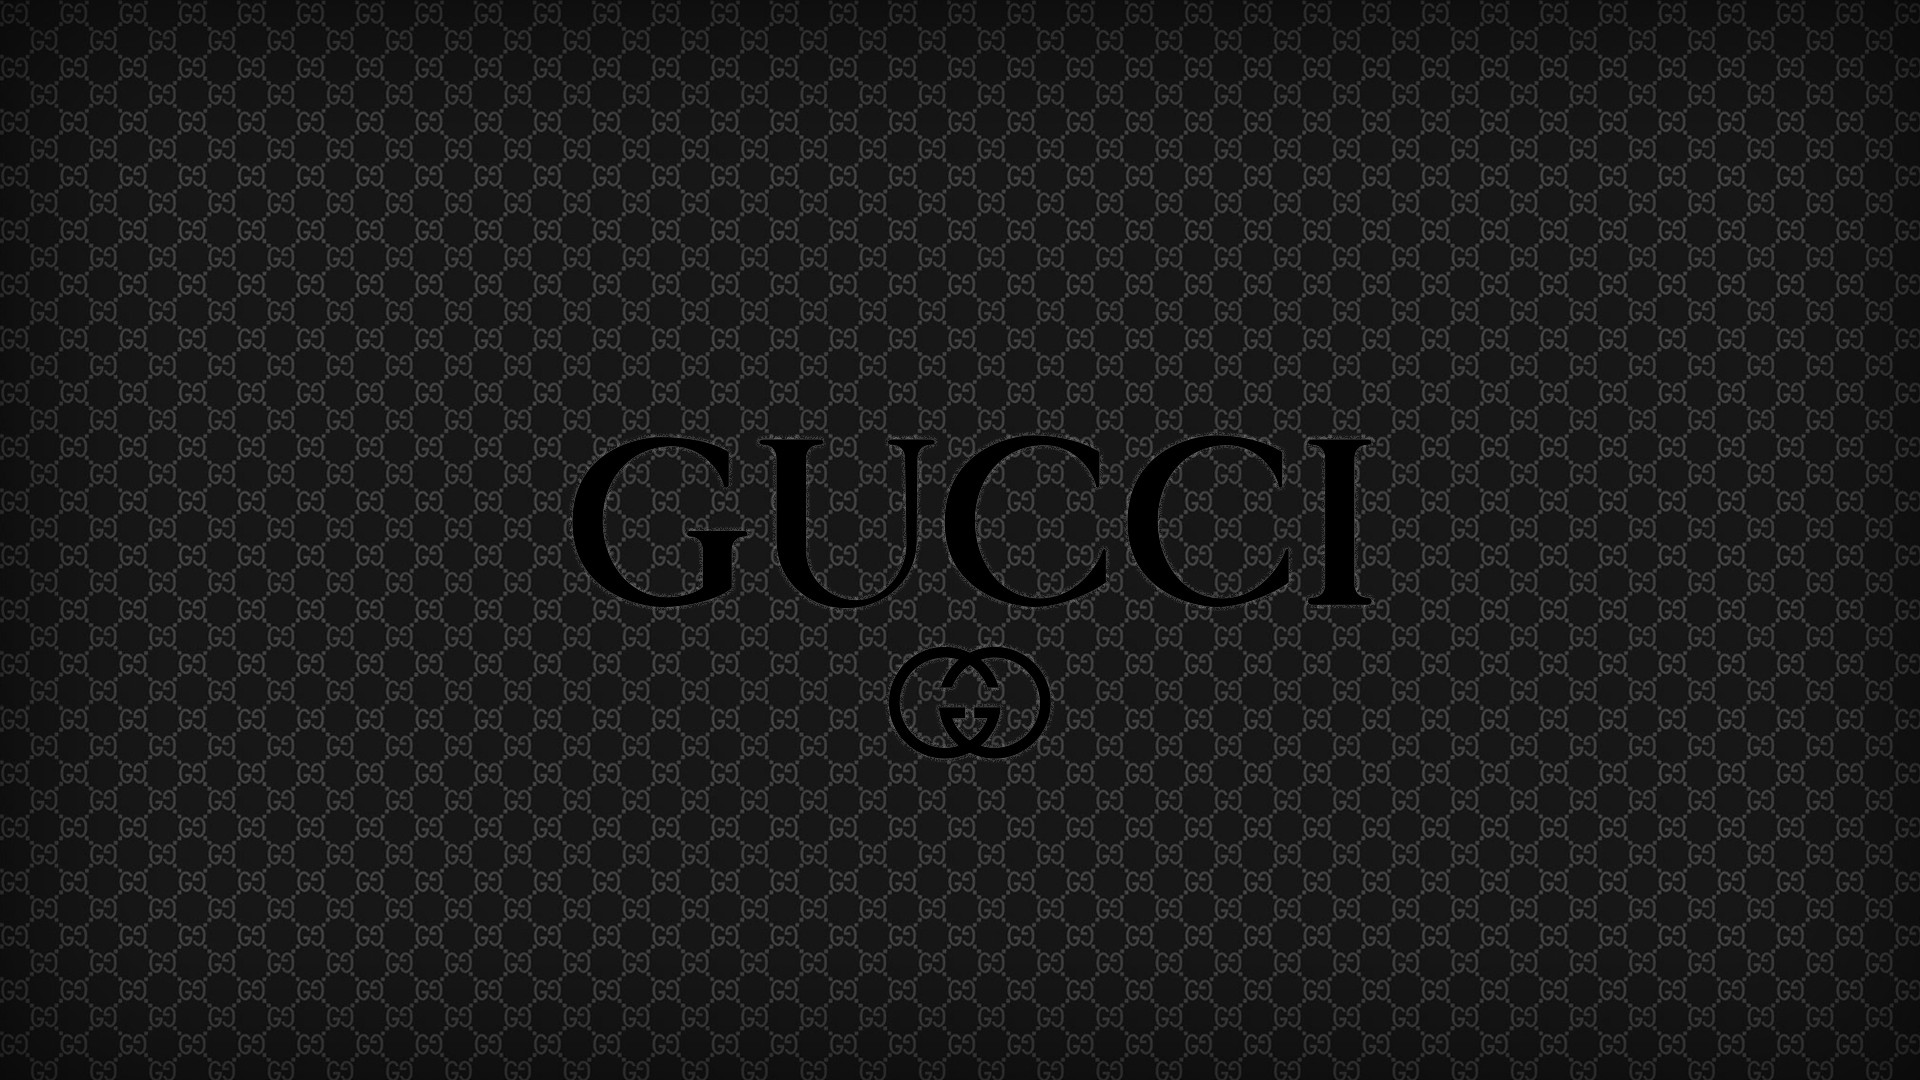 48 Gucci Wallpaper Hd On Wallpapersafari